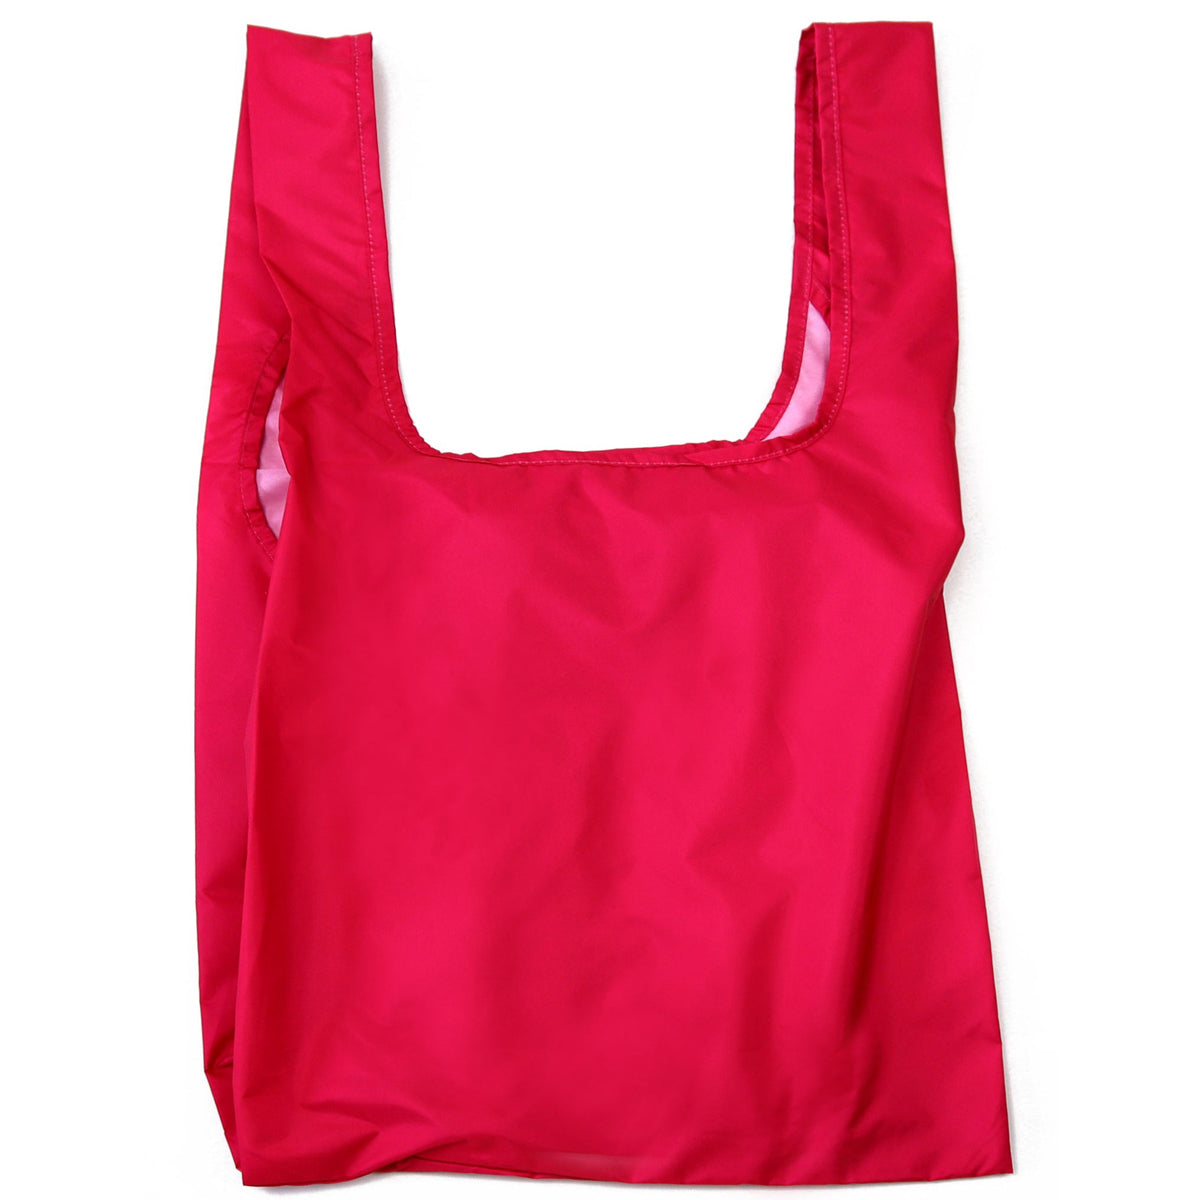 Kind Bag Reusable Foldaway Tote - Berry Pink 2